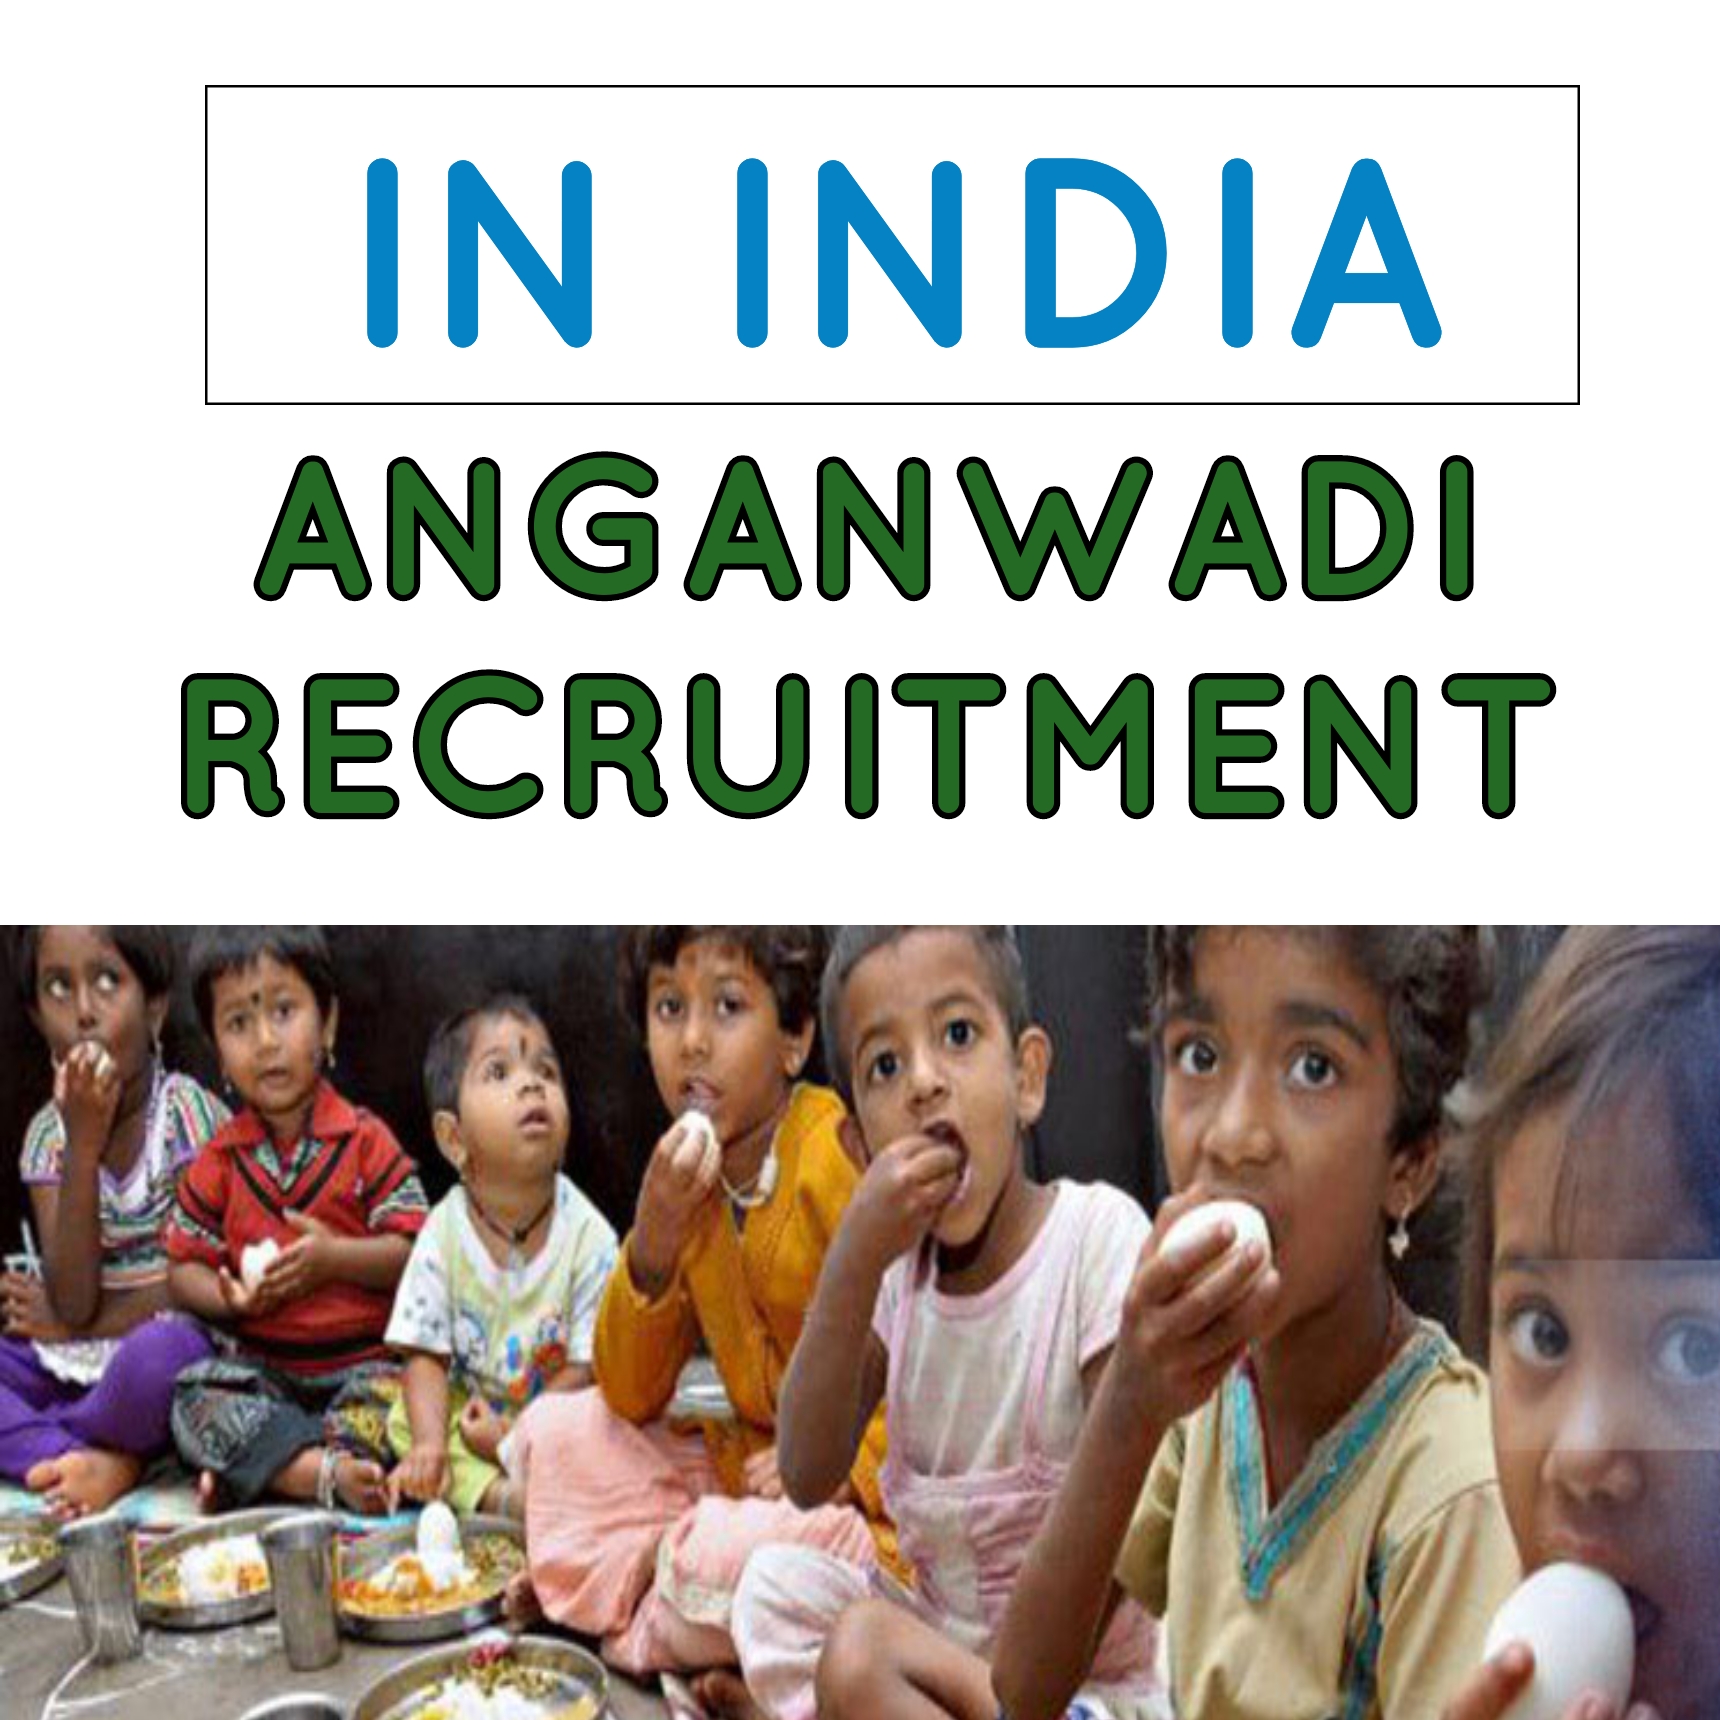 ANGANWADI RECRUITMENTS IN INDIA